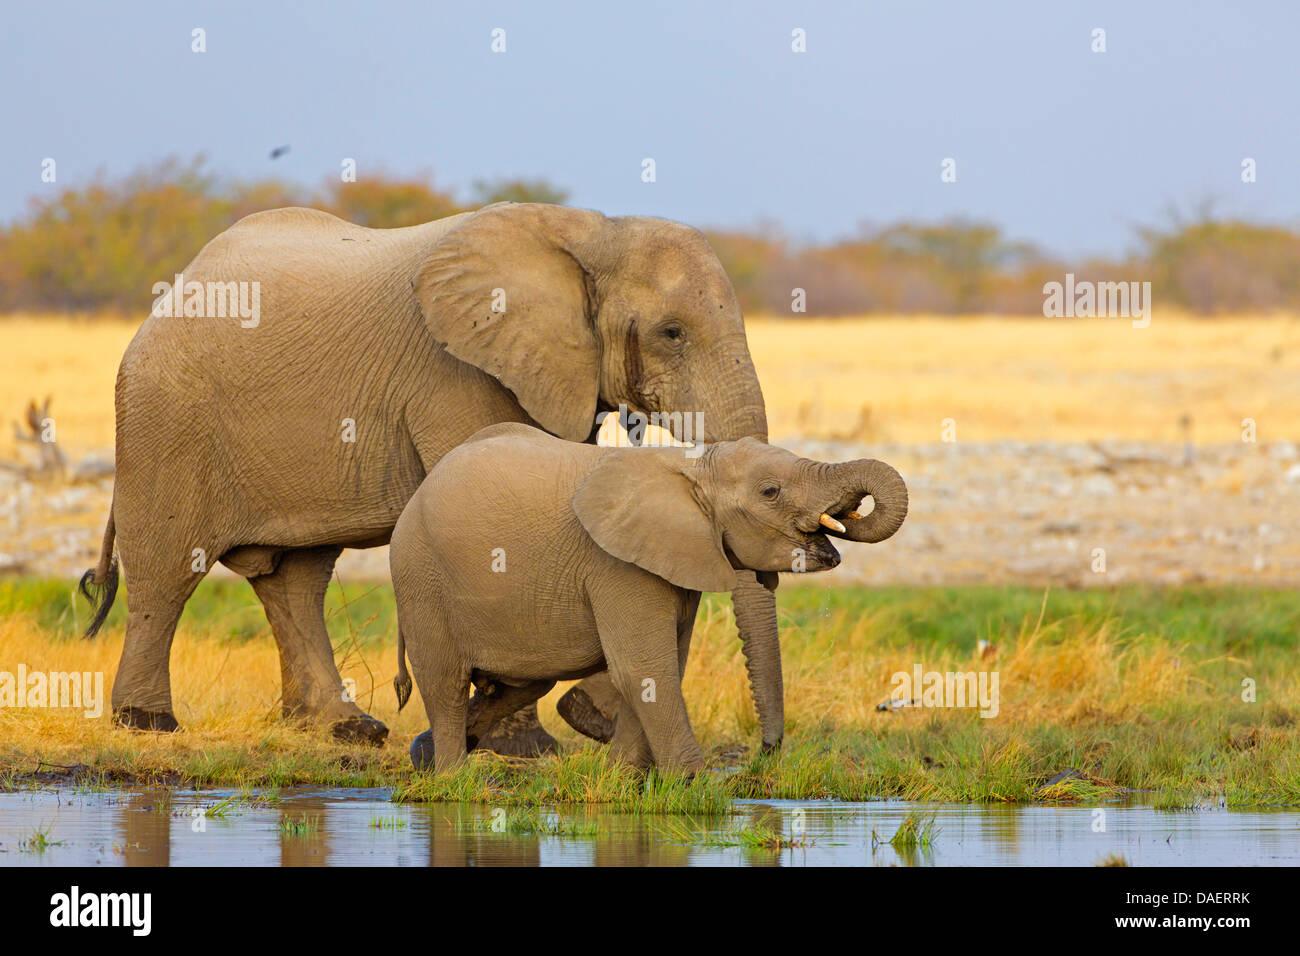 Afrikanischer Elefant (Loxodonta Africana), Elefant Kuh mit Kalb trinken aufgeben, Namibia, Oshikoto, Etosha Nationalpark, Riedfontein Brunnen Stockfoto